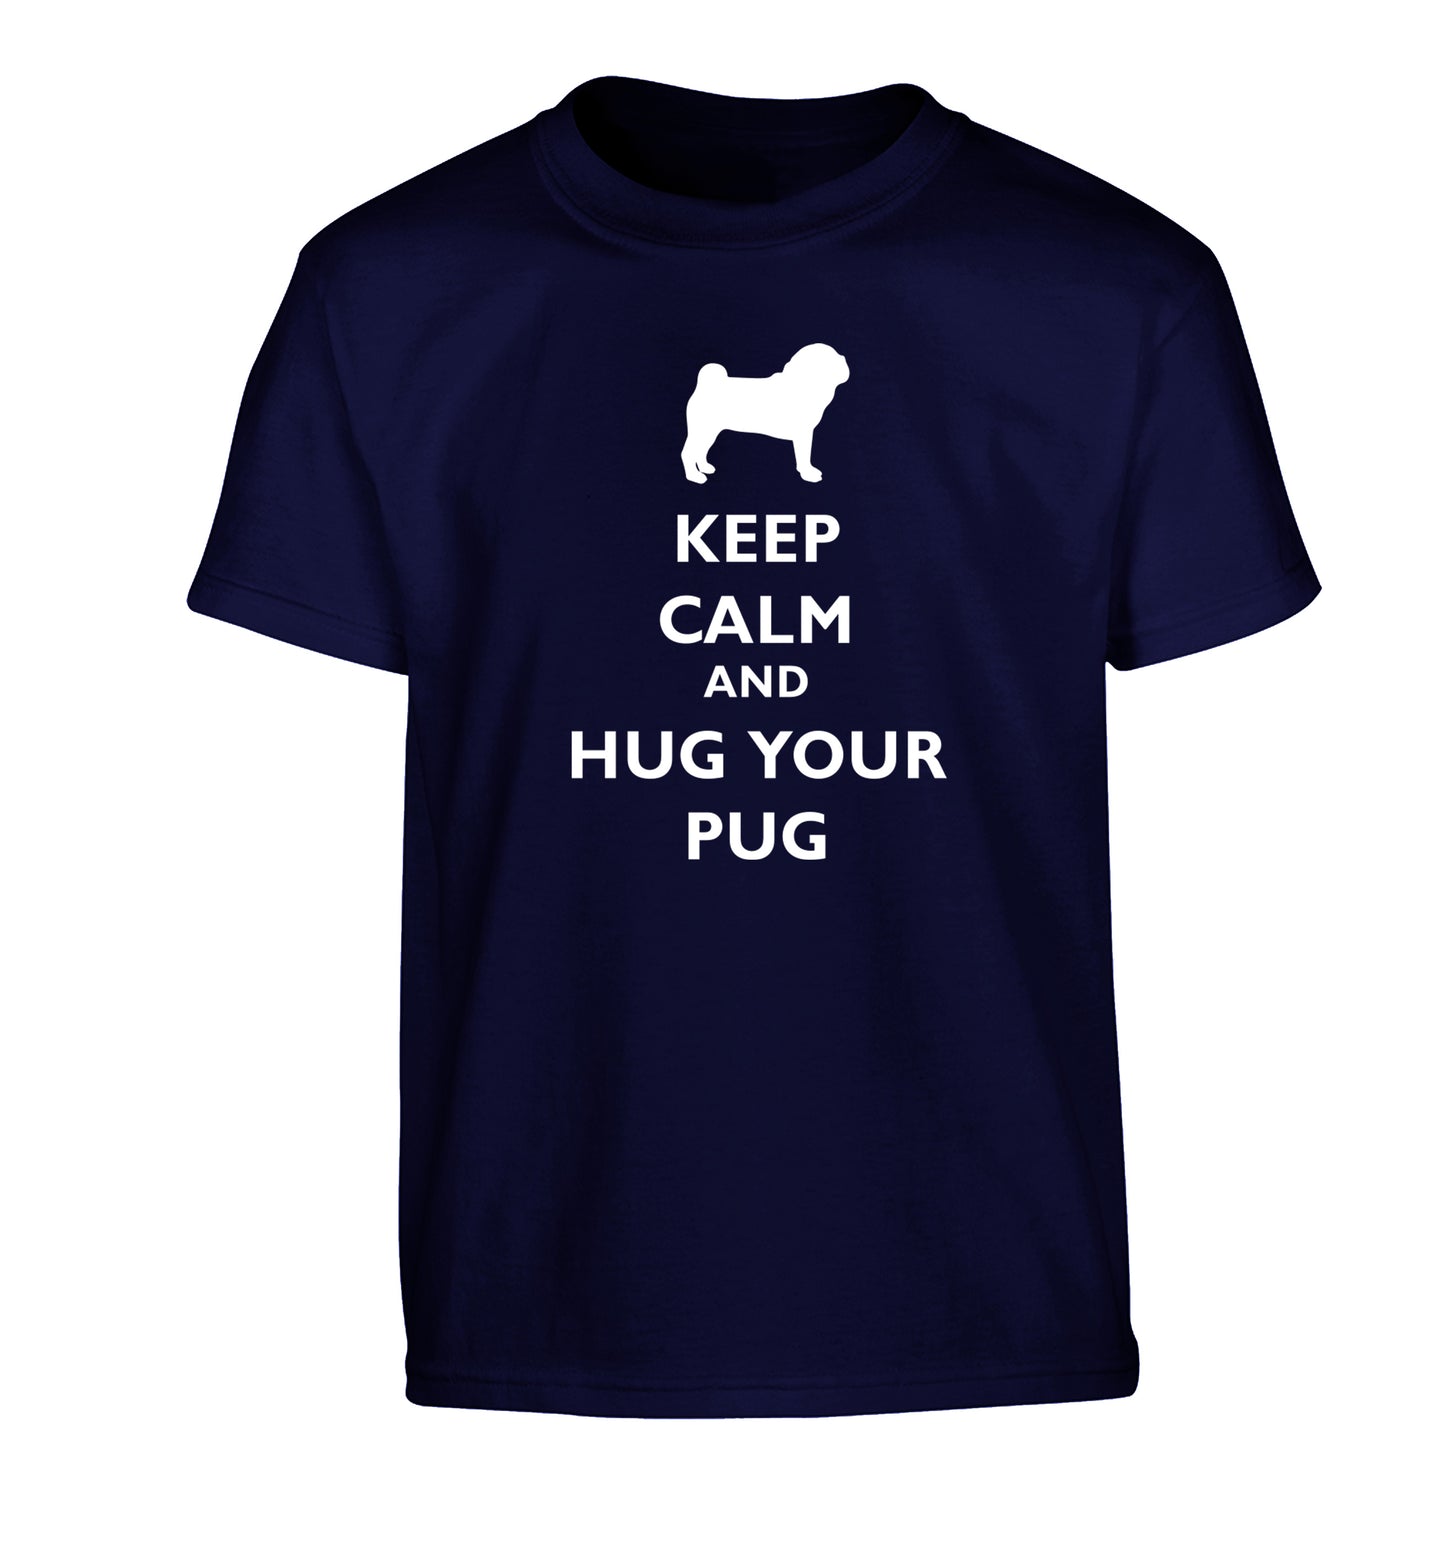 Keep calm and hug your pug Children's navy Tshirt 12-13 Years